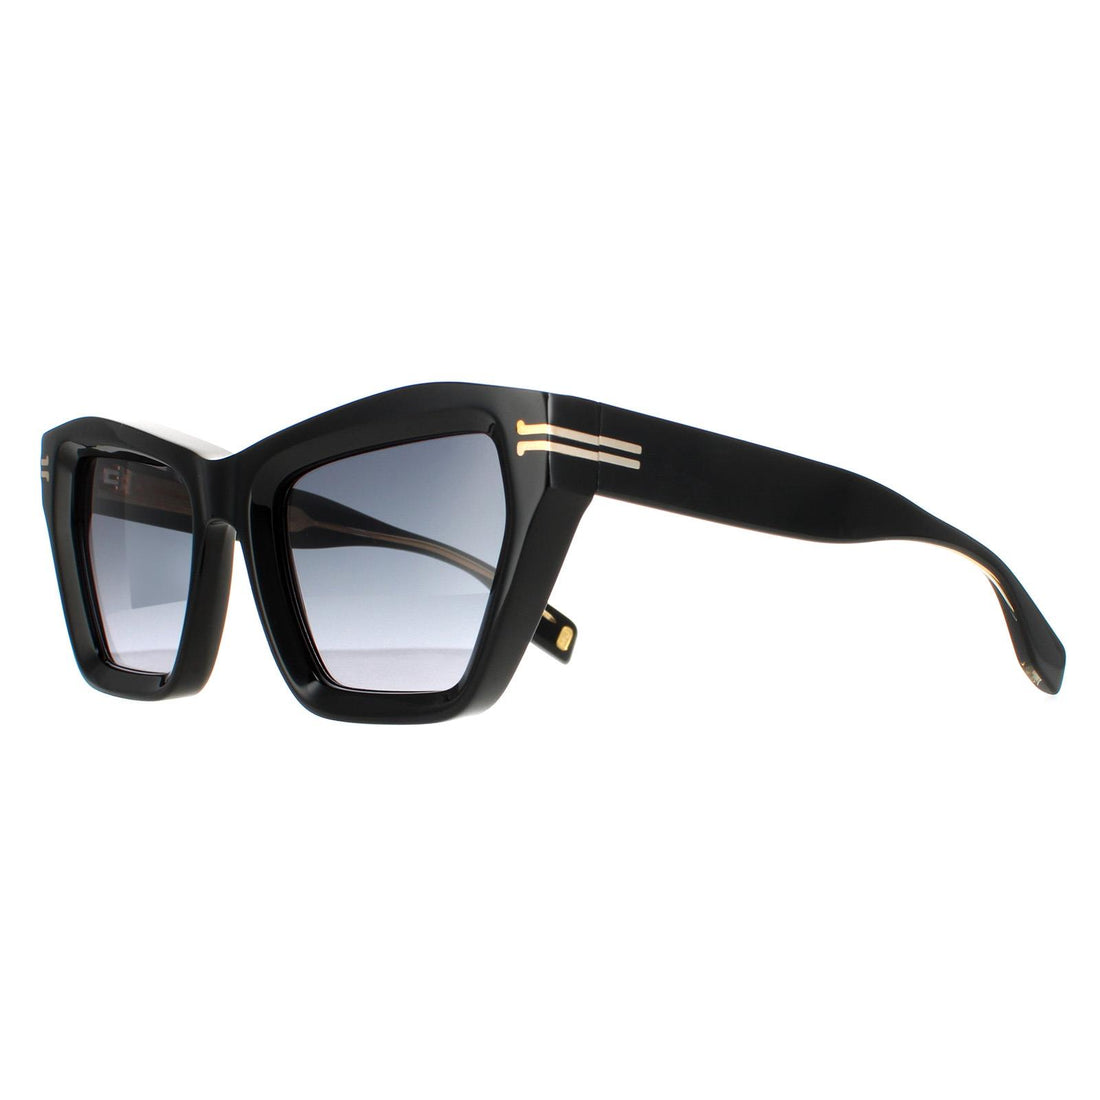 Marc Jacobs Sunglasses MJ 1001/S 807 9O Black Dark Grey Gradient